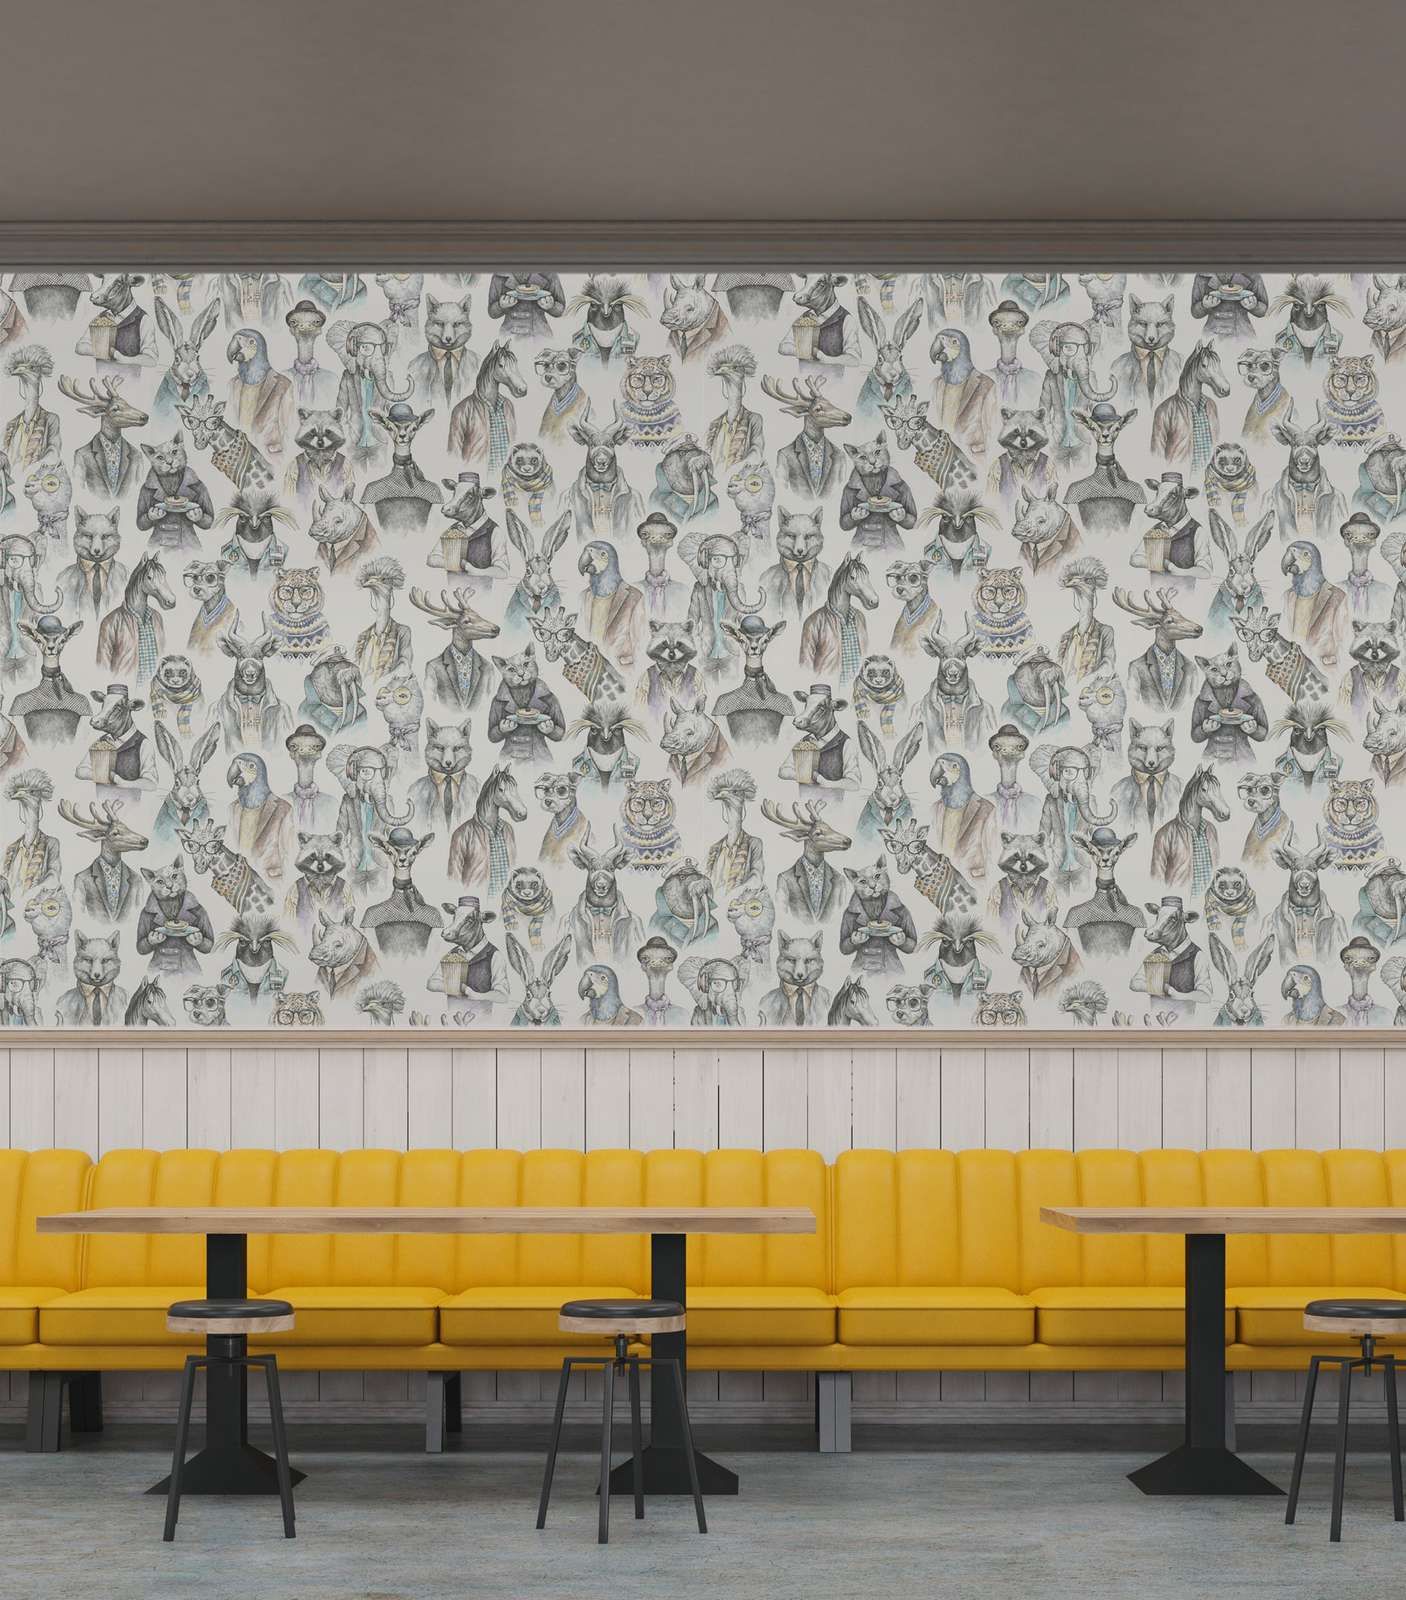             Non-woven wallpaper fabulous animal world by New-Walls - cream, multicoloured
        